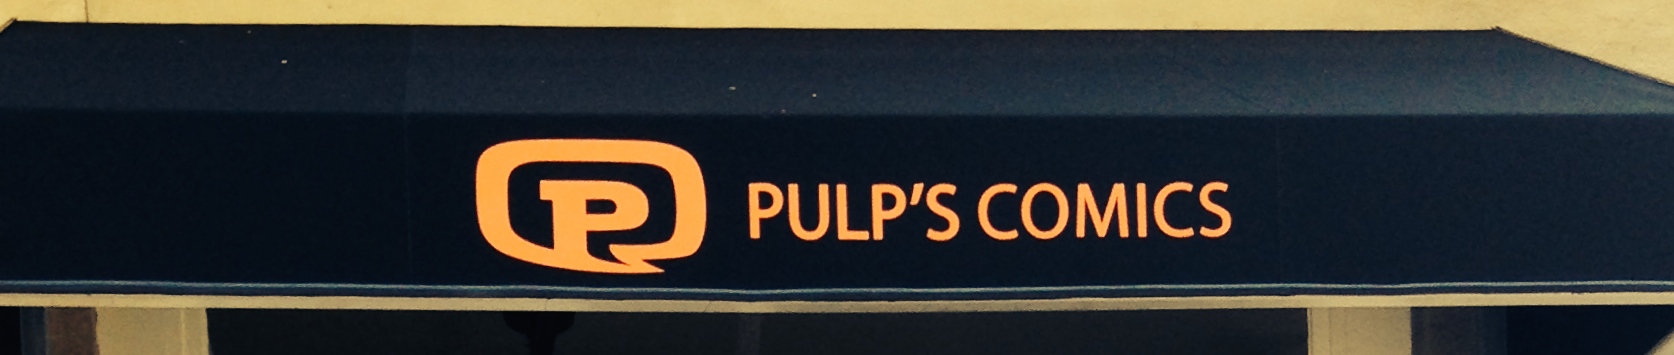 Pulps Comics Banner